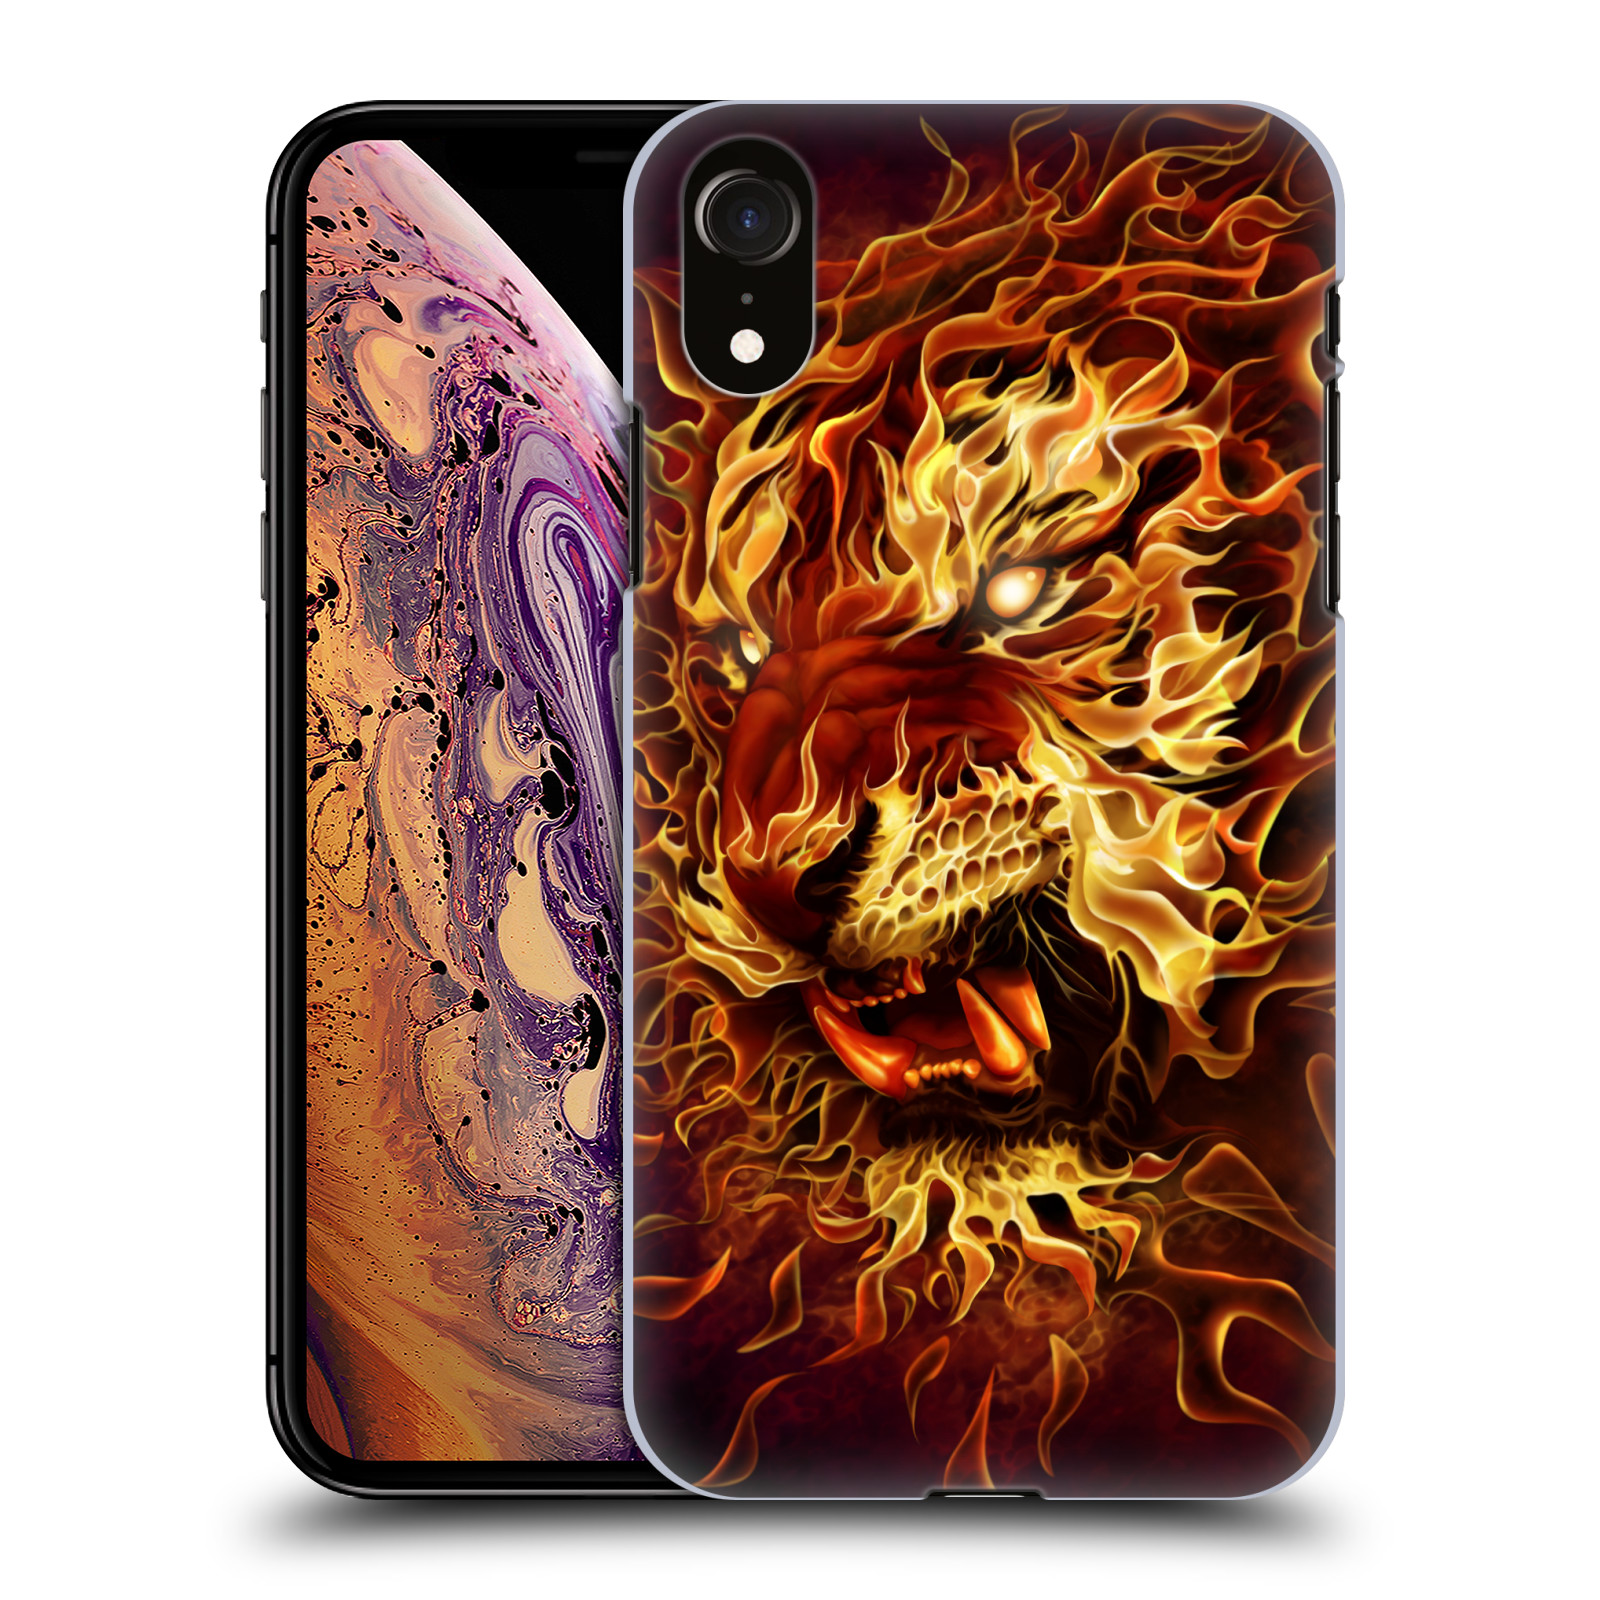 Pouzdro na mobil Apple Iphone XR - HEAD CASE - Fantasy kresby Tom Wood - Ohnivý tygr